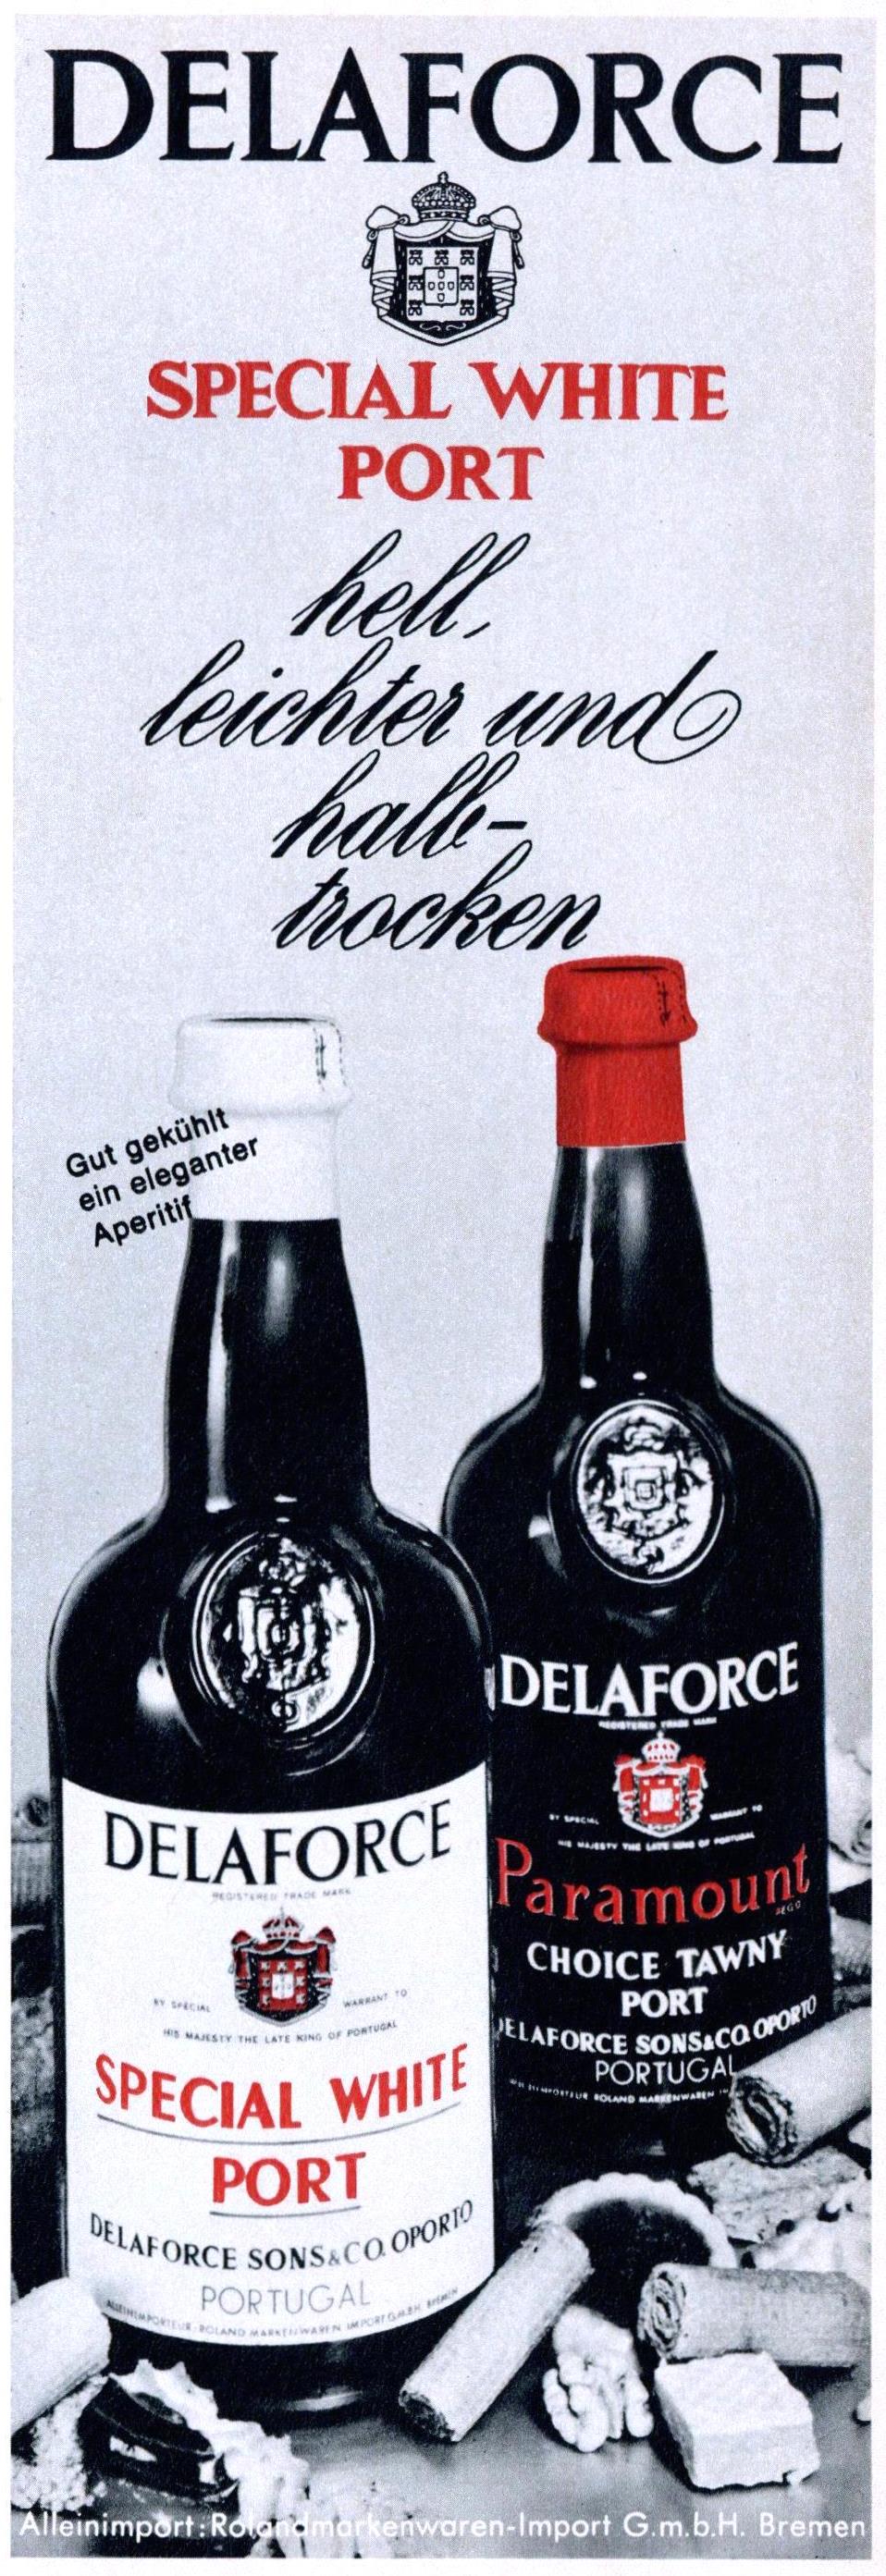 Delaforce 1971 0.jpg